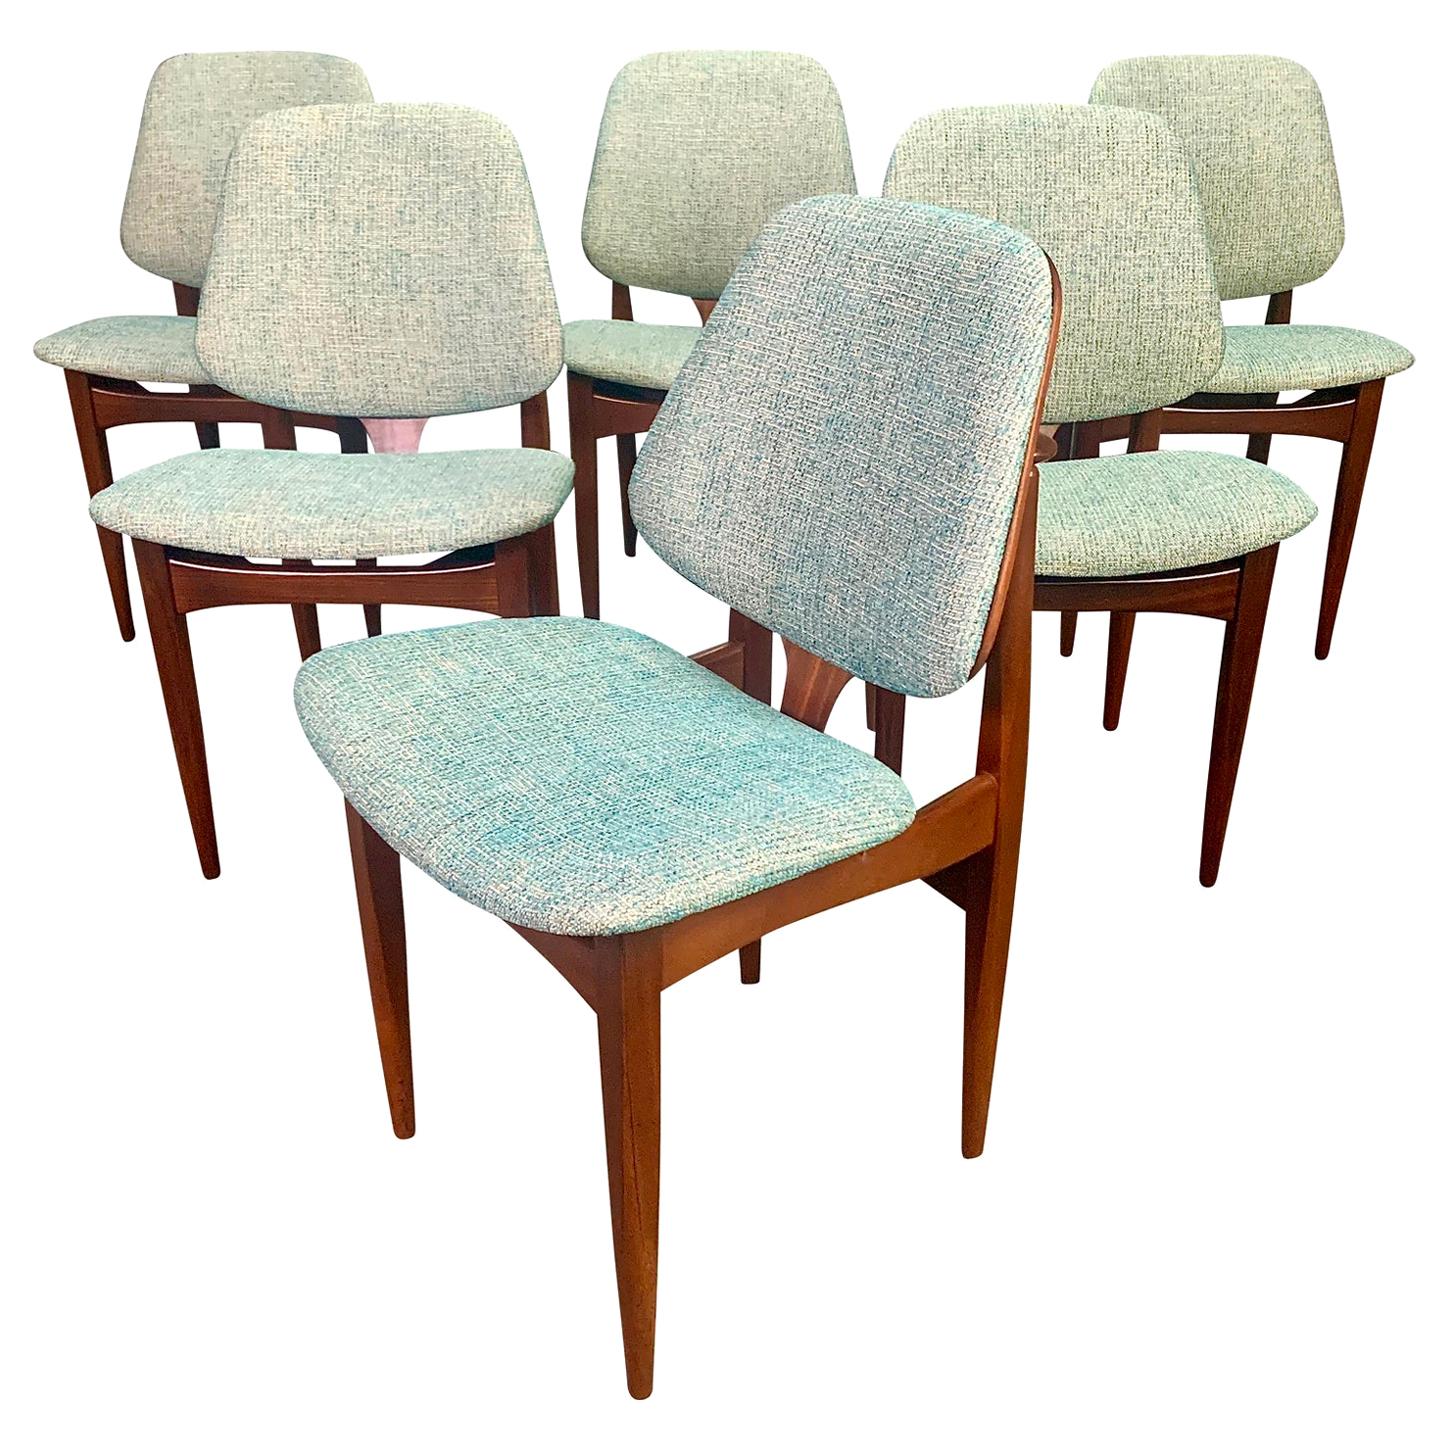 Vintage British Mid-Century Modern Teak Chairs by Elliotts of Newbury, Set of 6